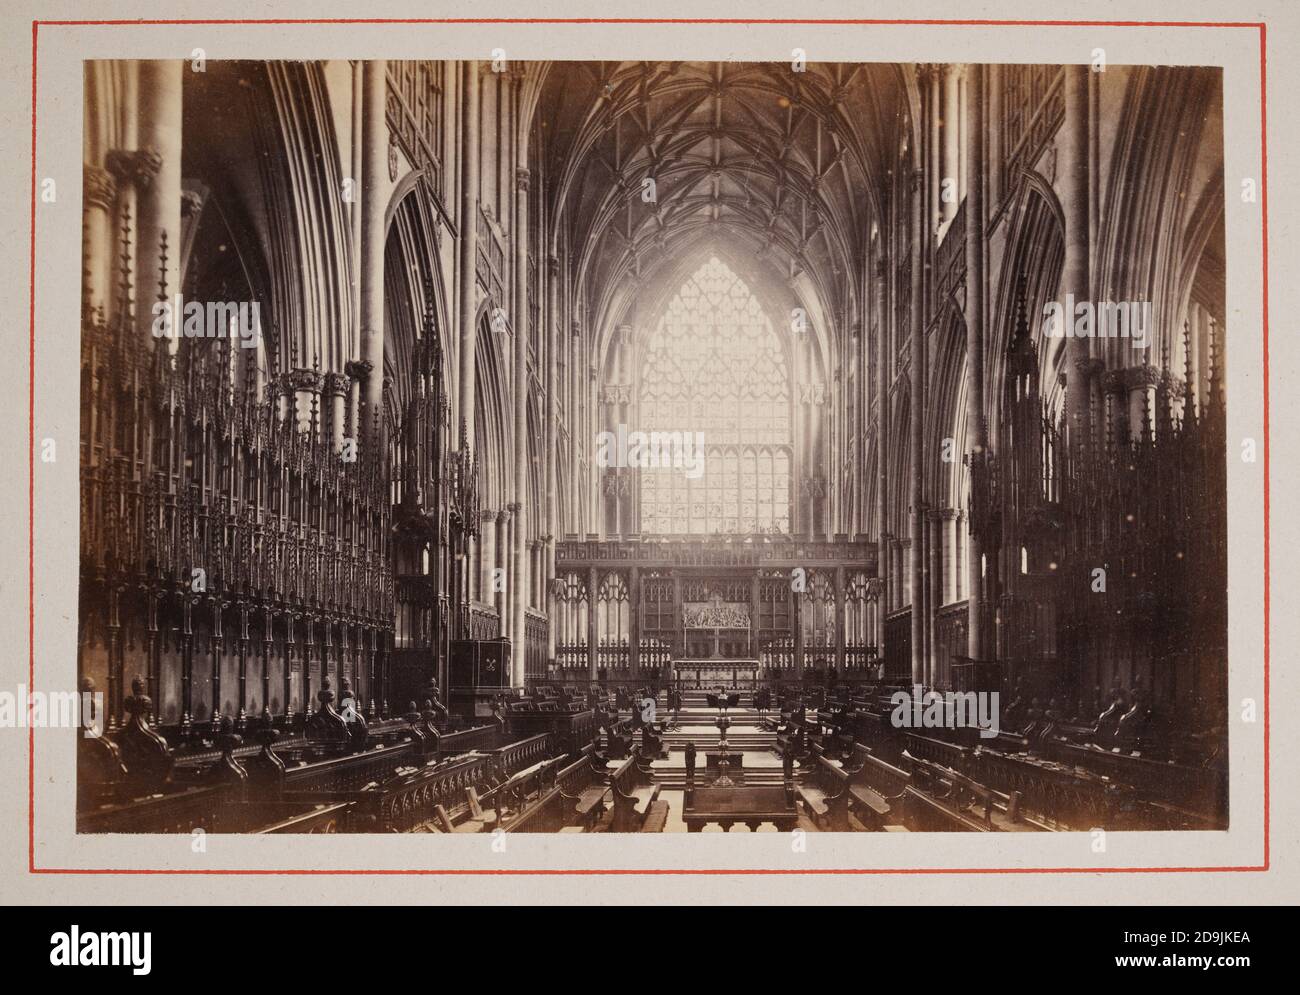 Vintage photograph of Interior of York Minster, York, England, 19th Century Stock Photo